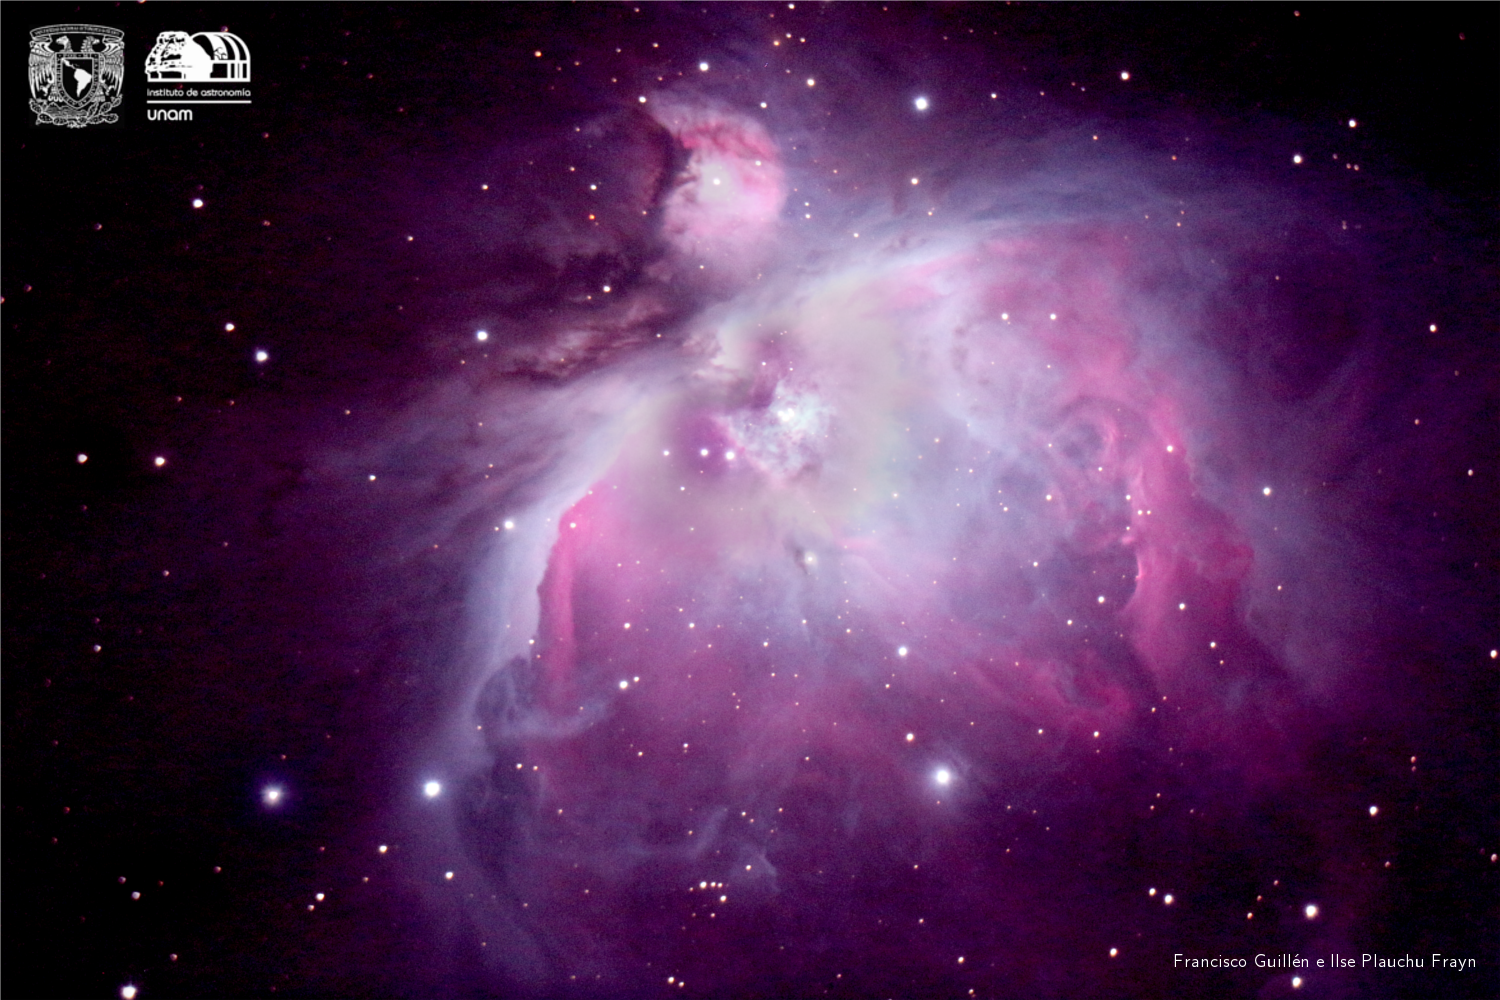 Orion nebulae